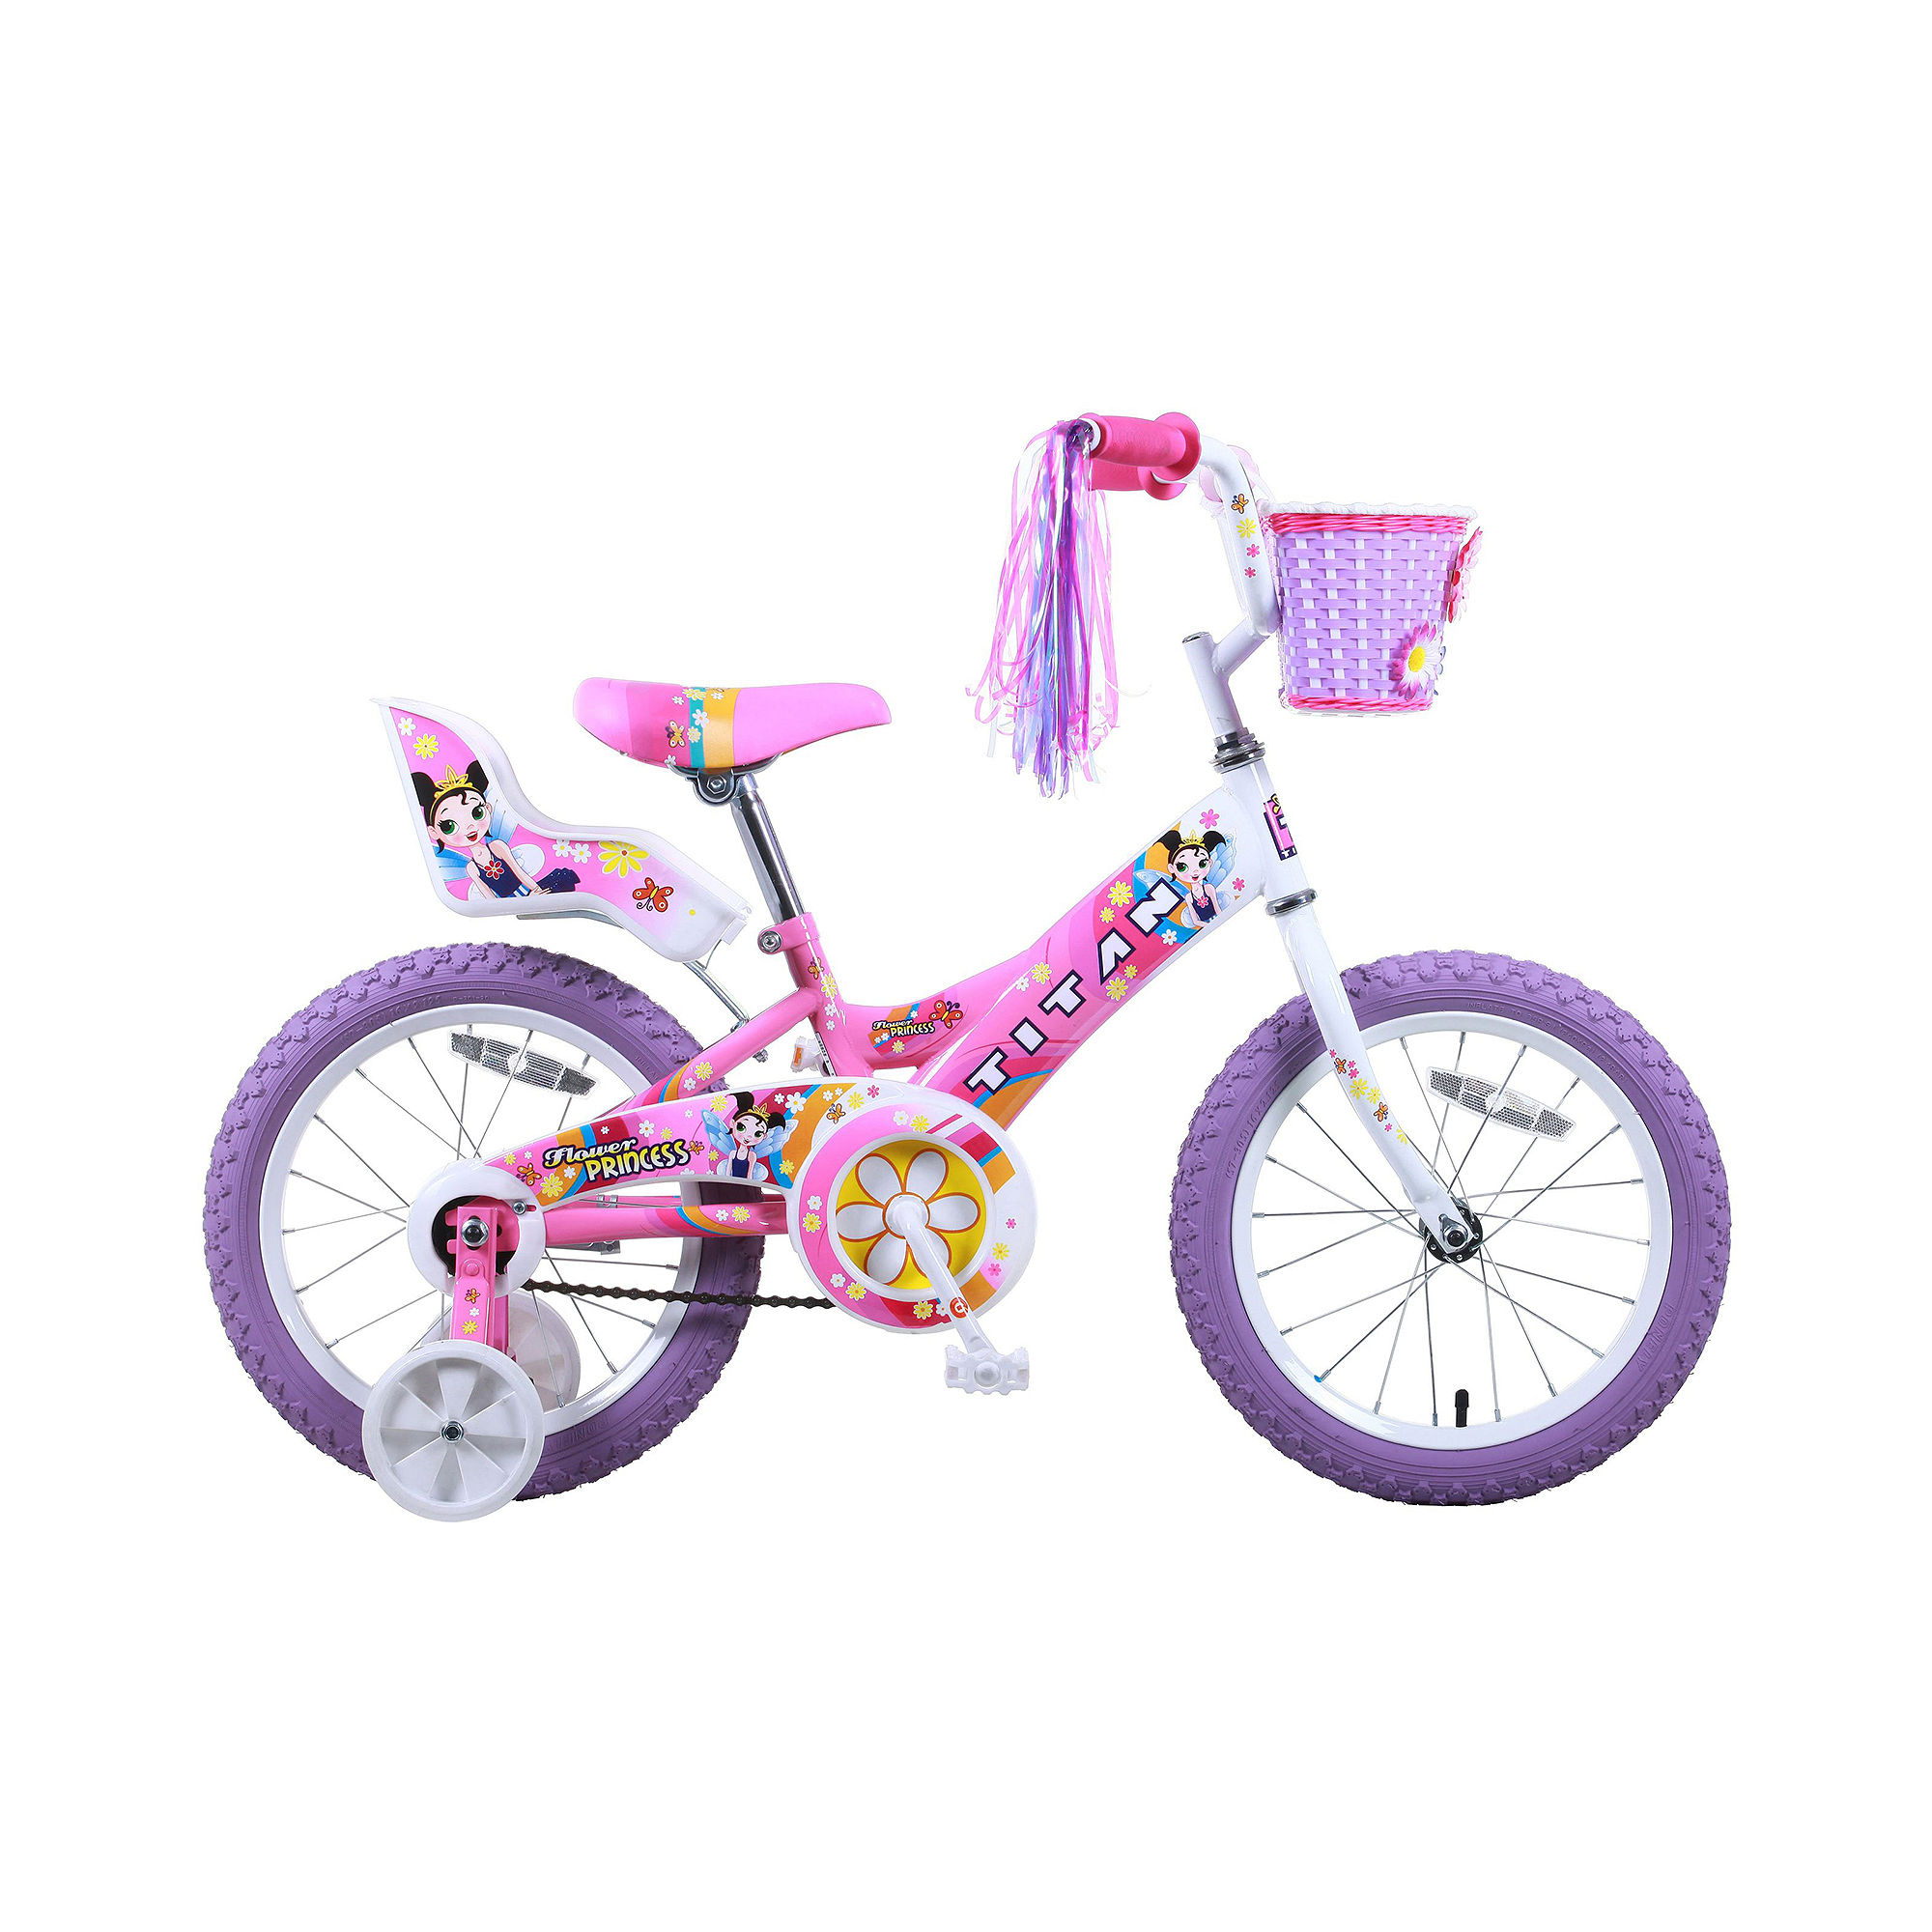 Titan Flower Princess Girls' BMX Bike